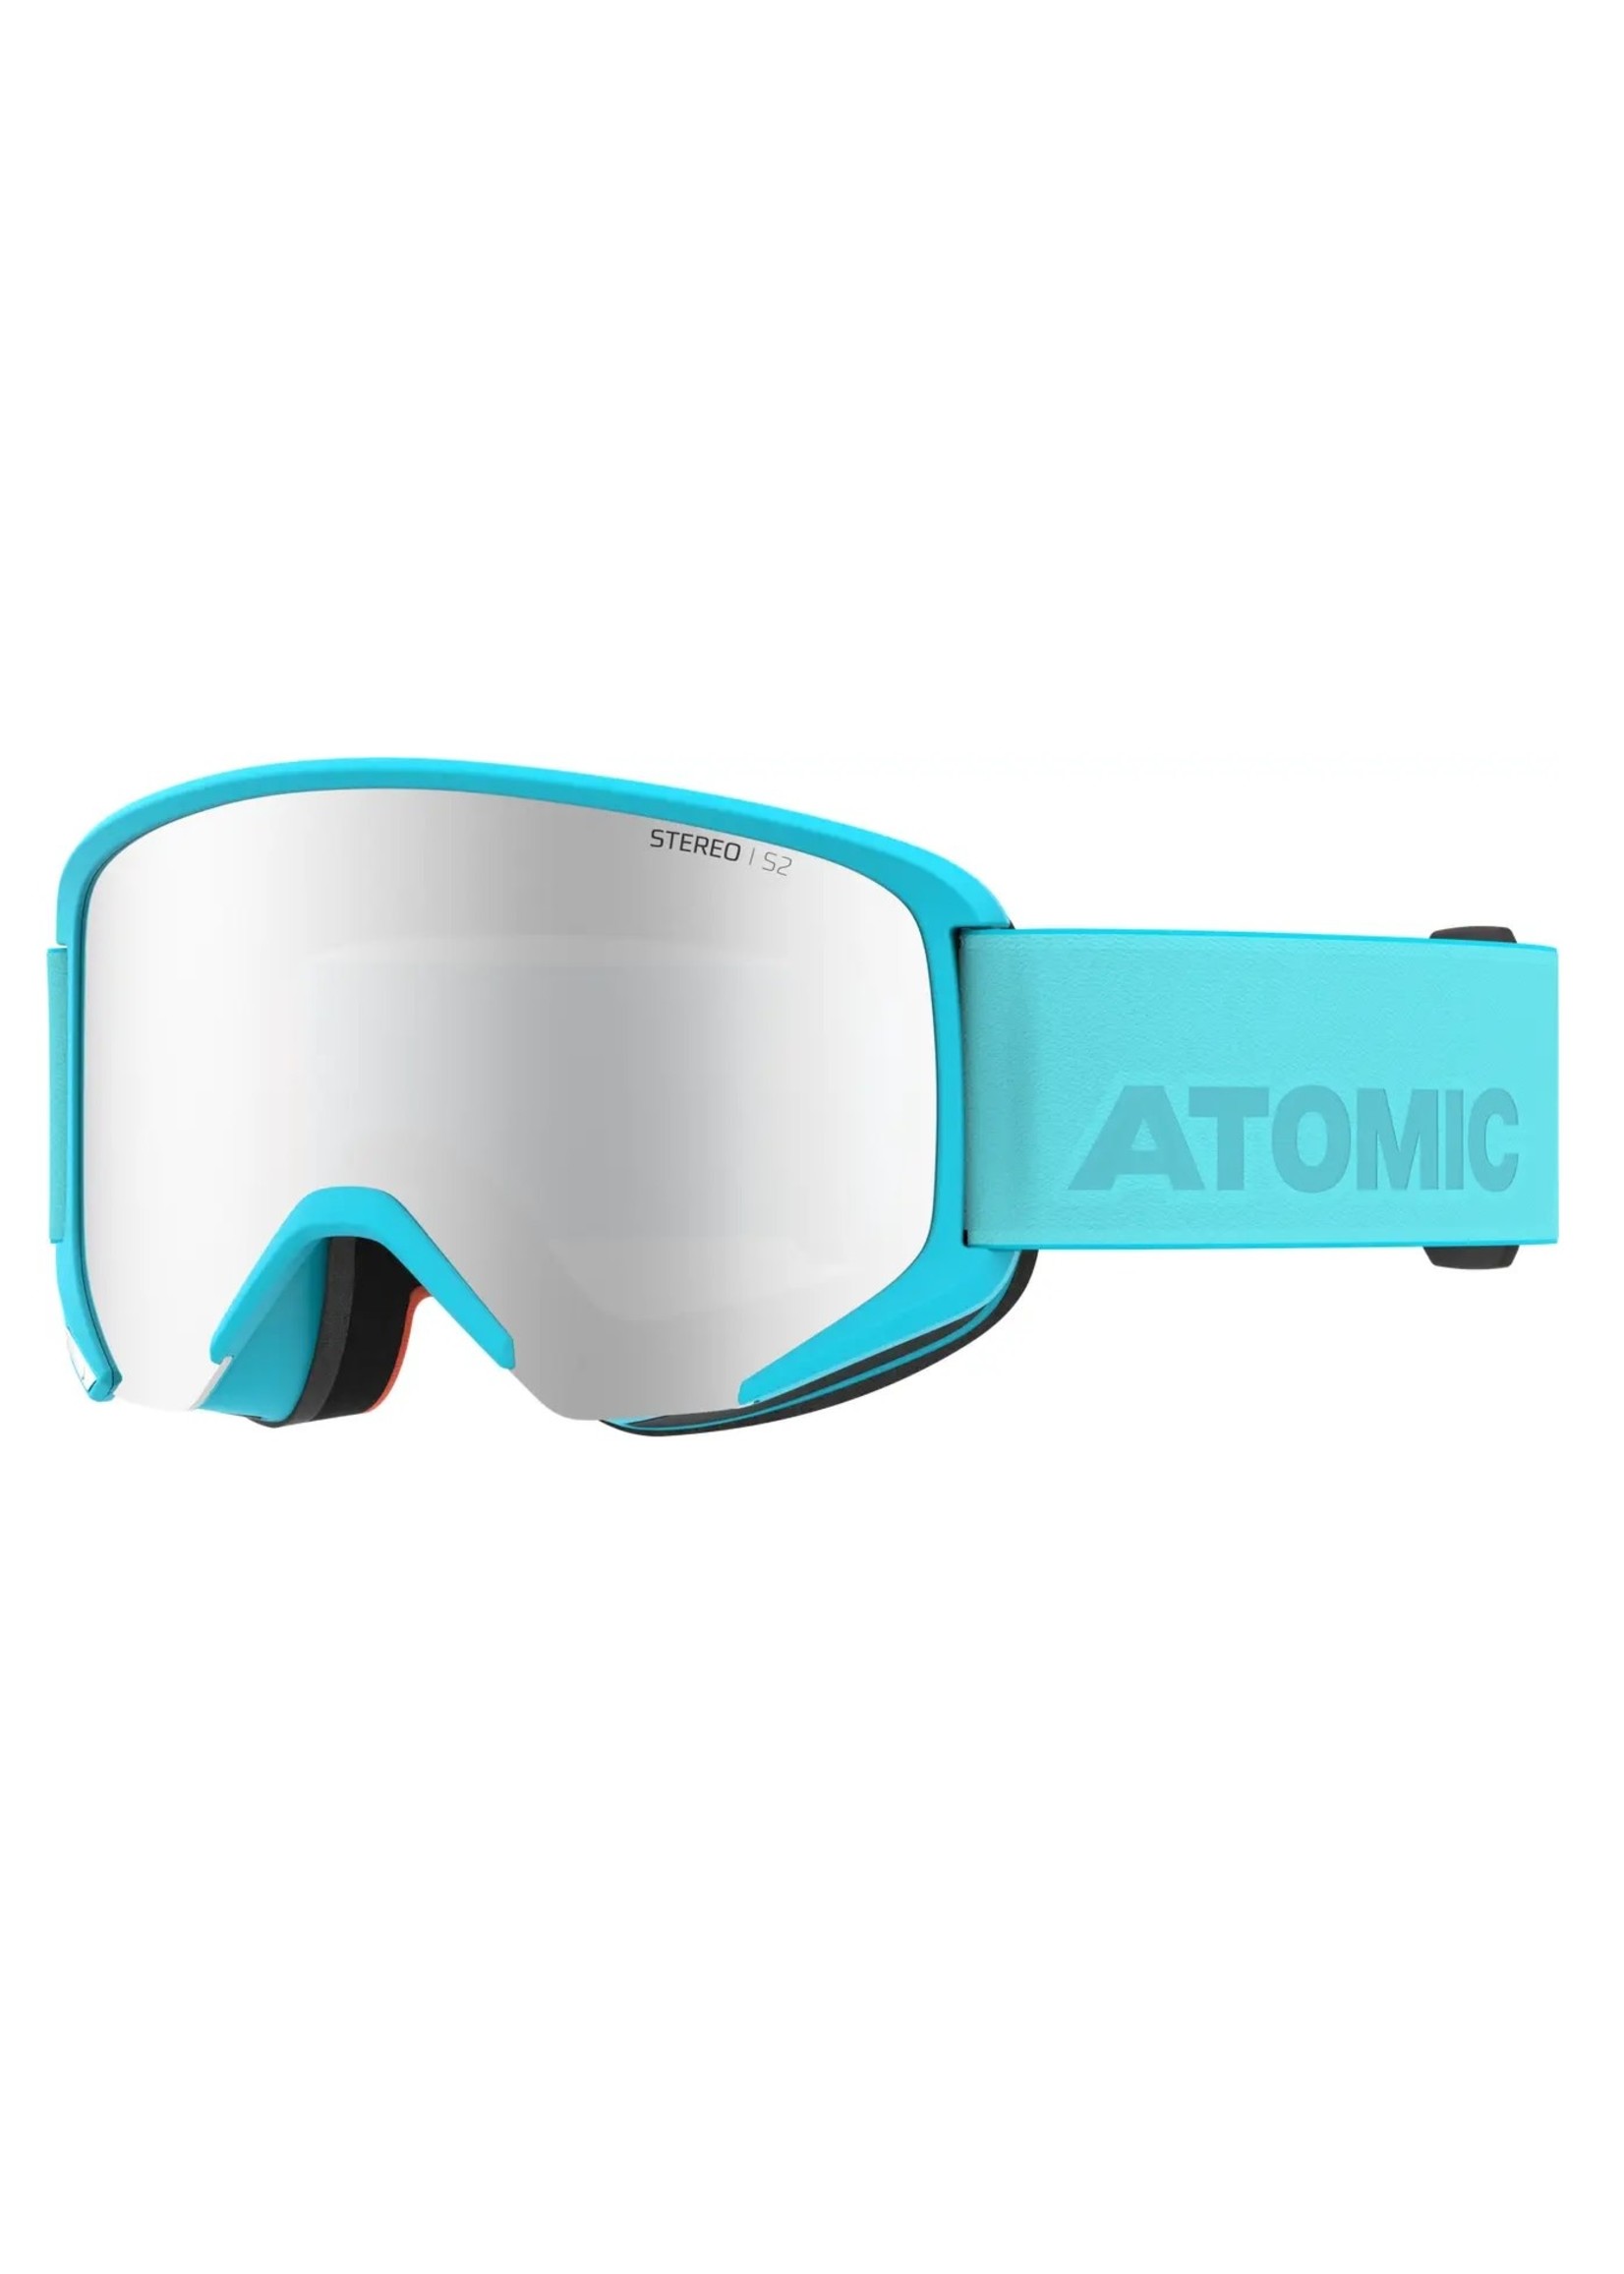 Atomic Atomic Savor Stereo Goggles - Unisex